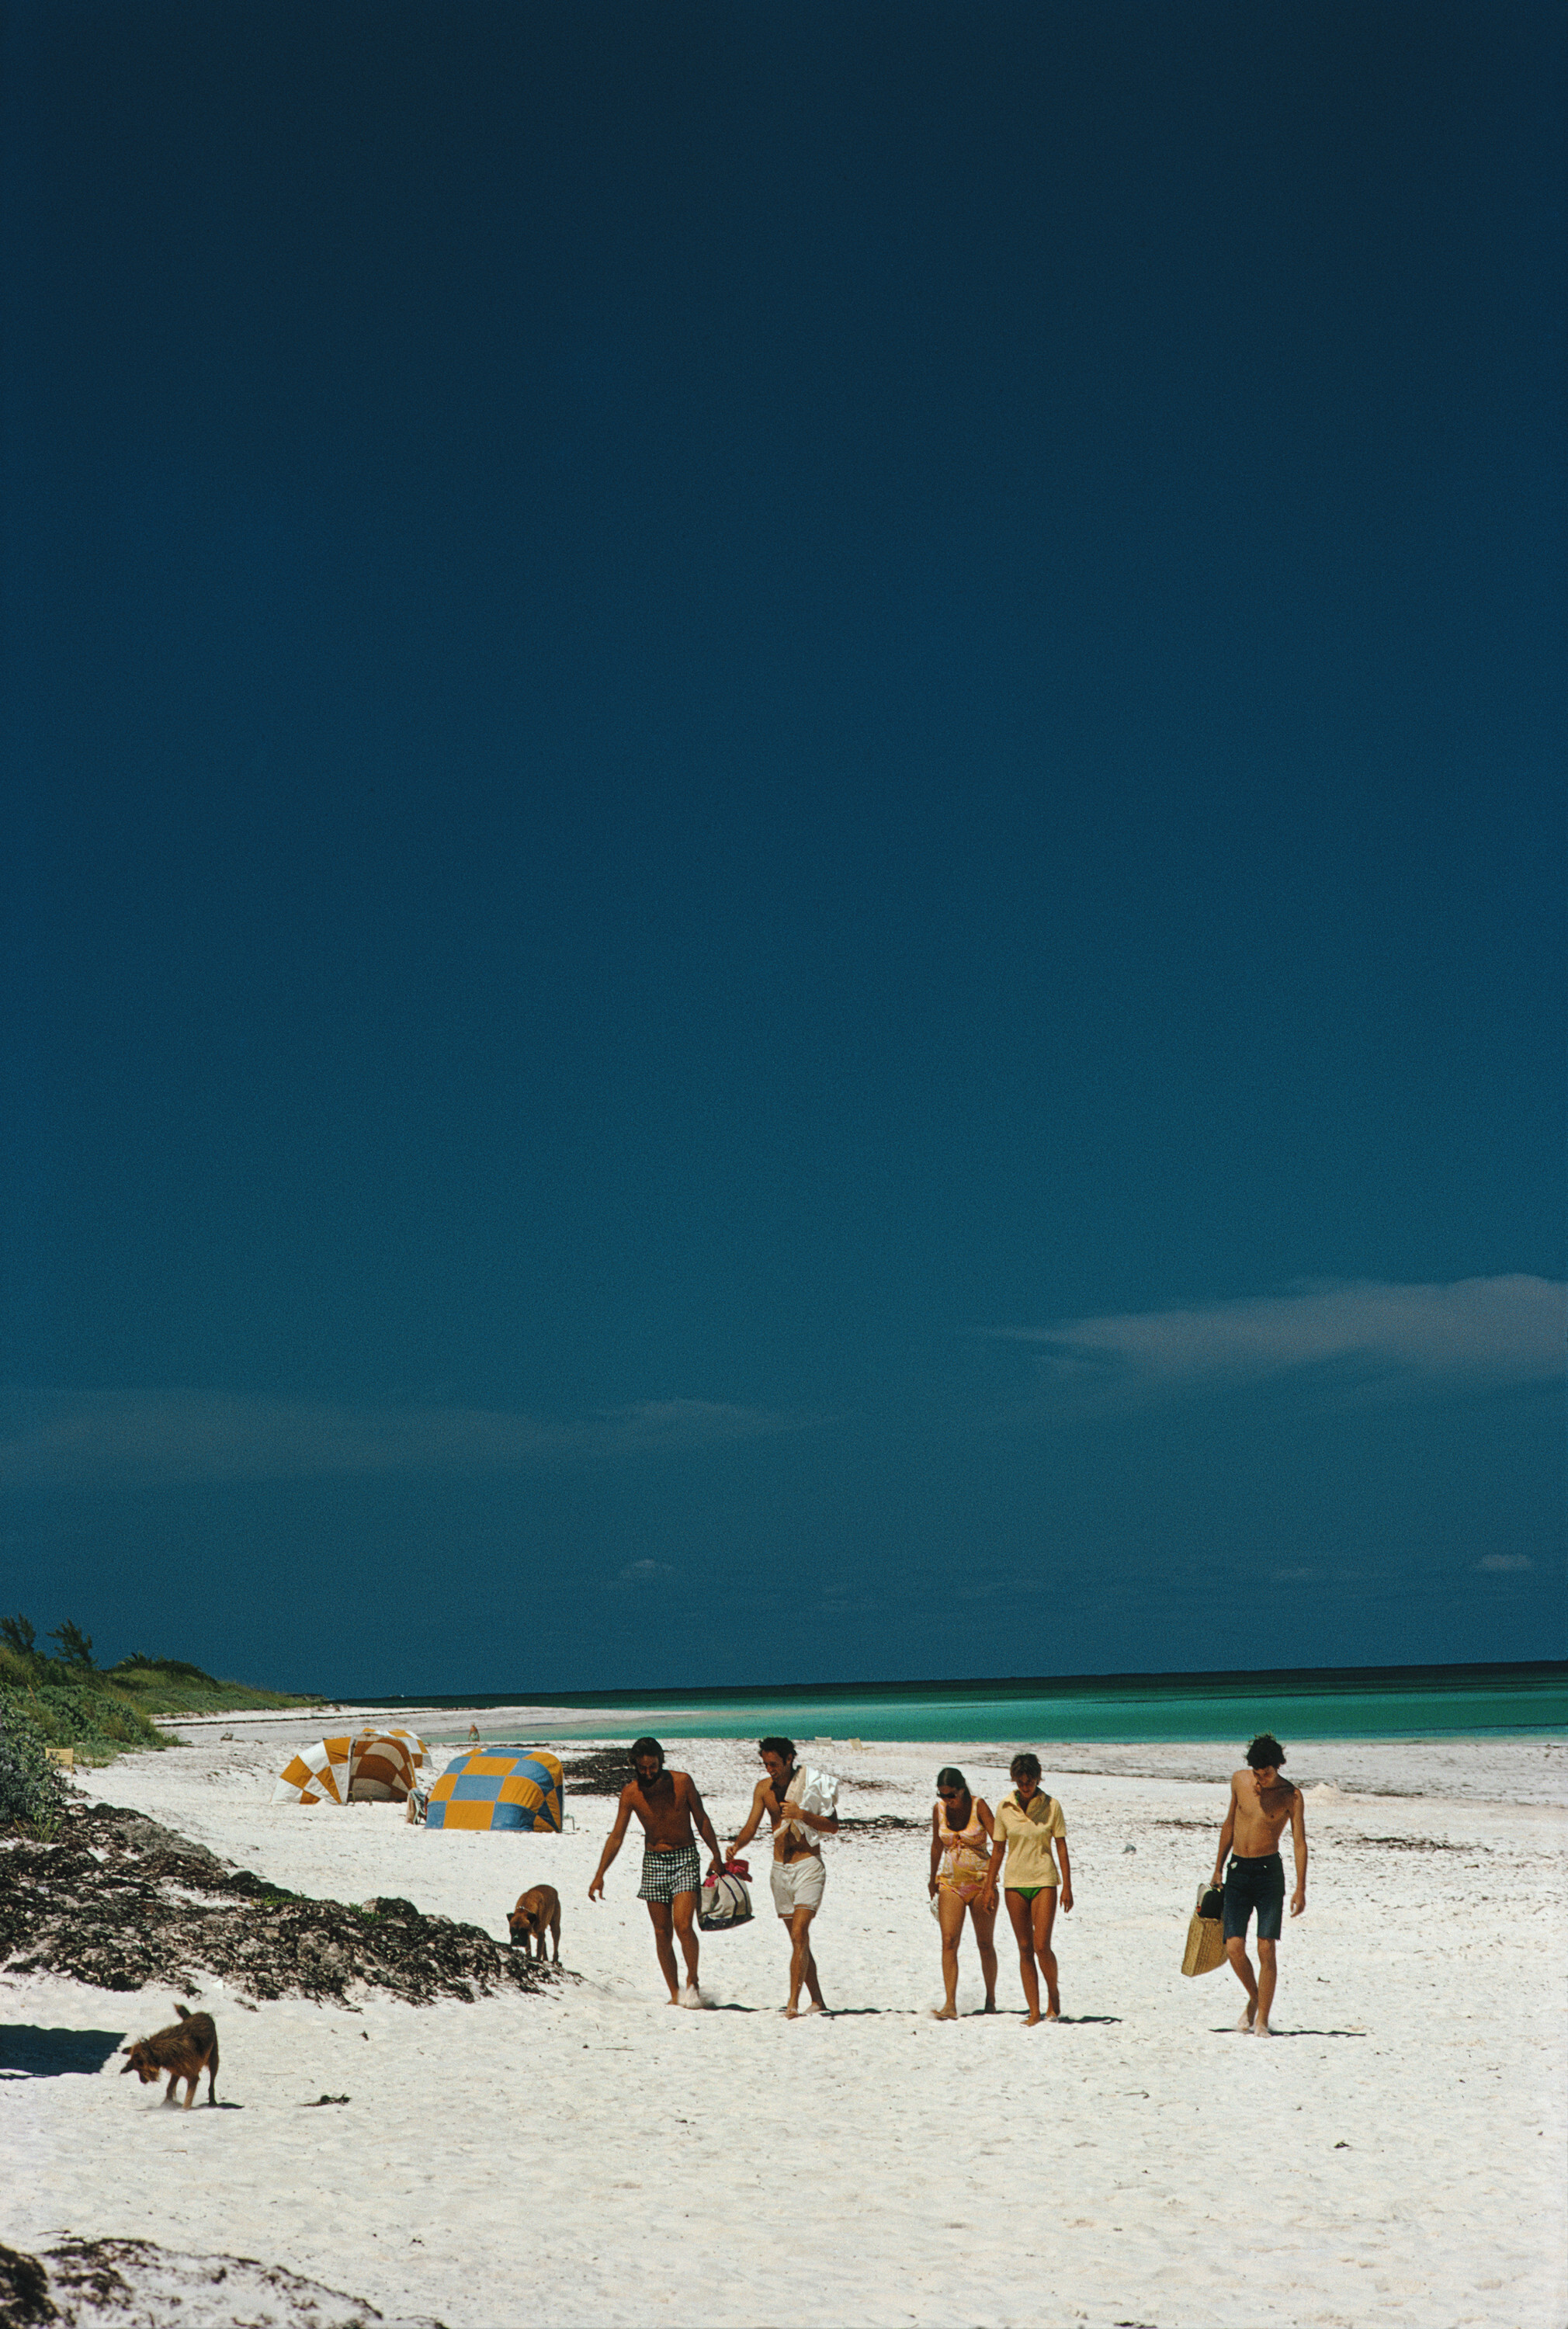 Пляж Харбор-Айл, 1973 год. Фотограф Слим Ааронс